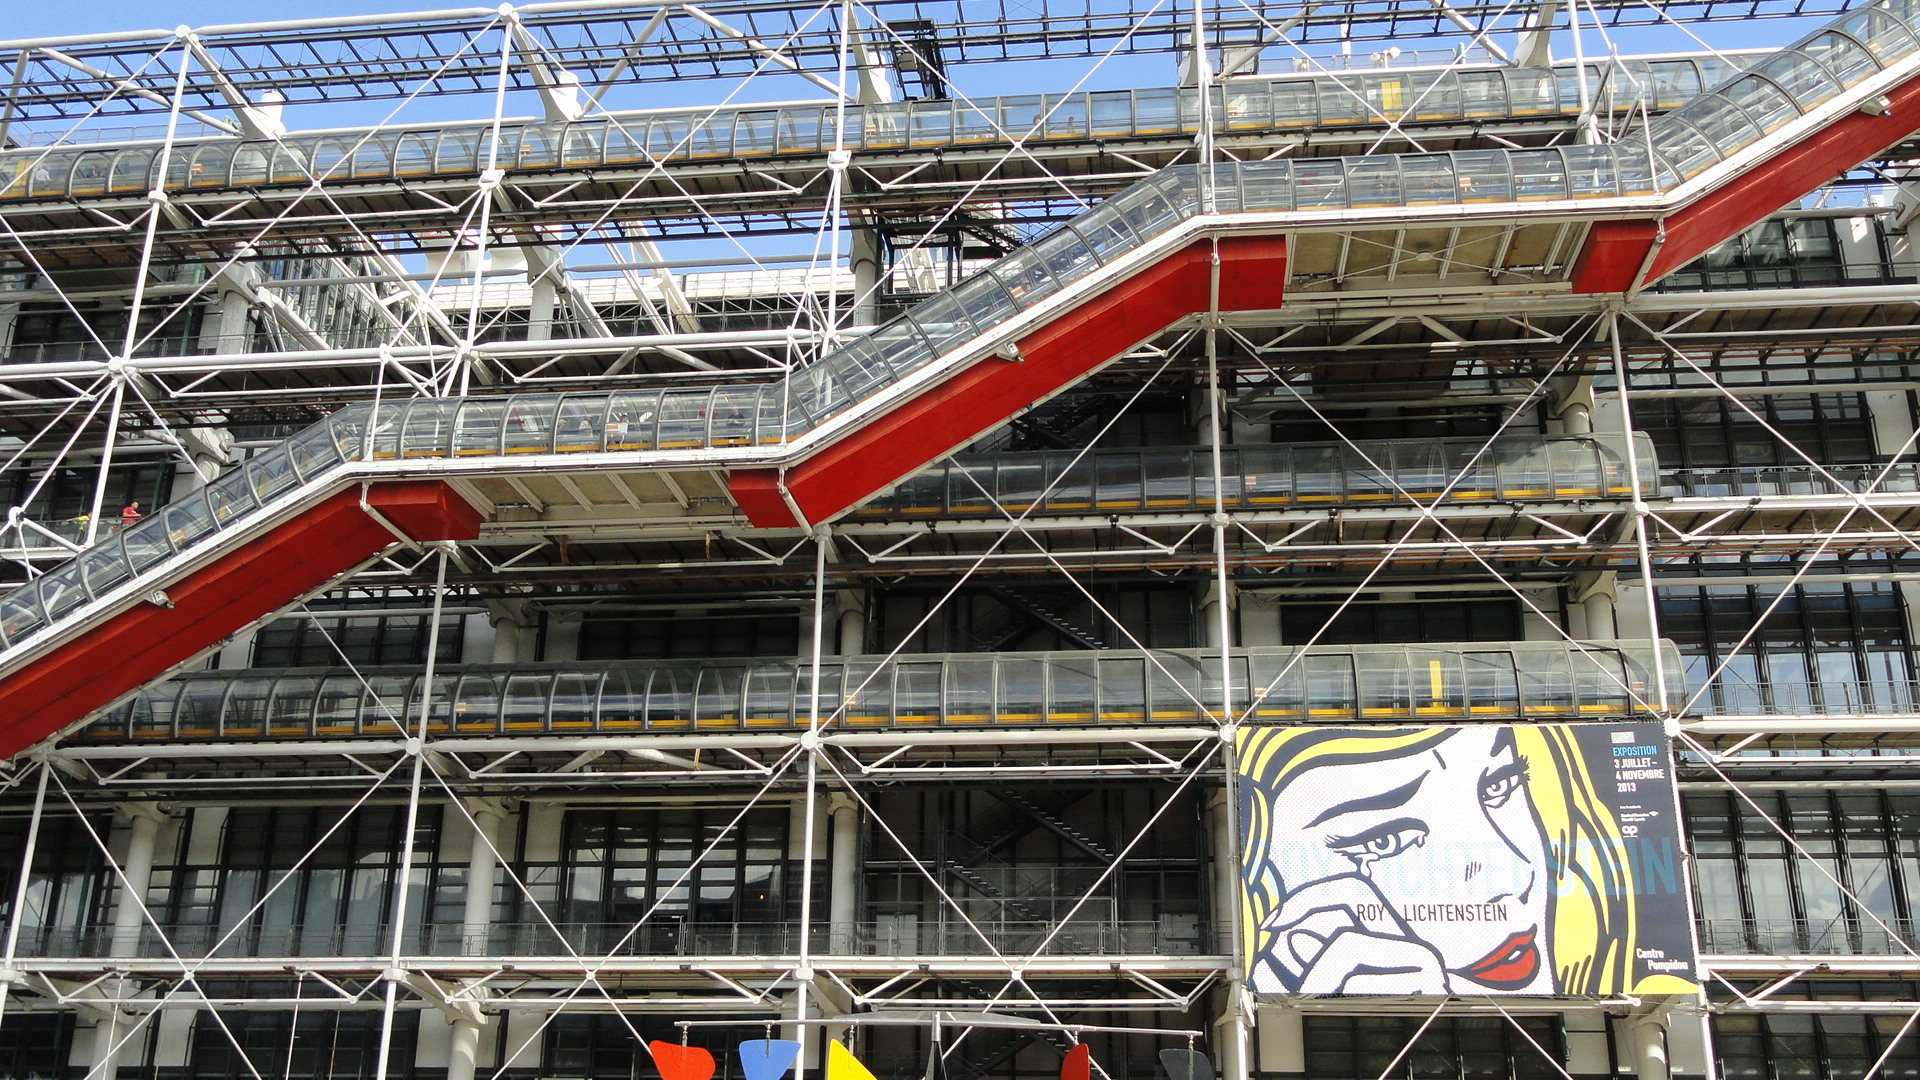 Centre Pompidou - Son escalier